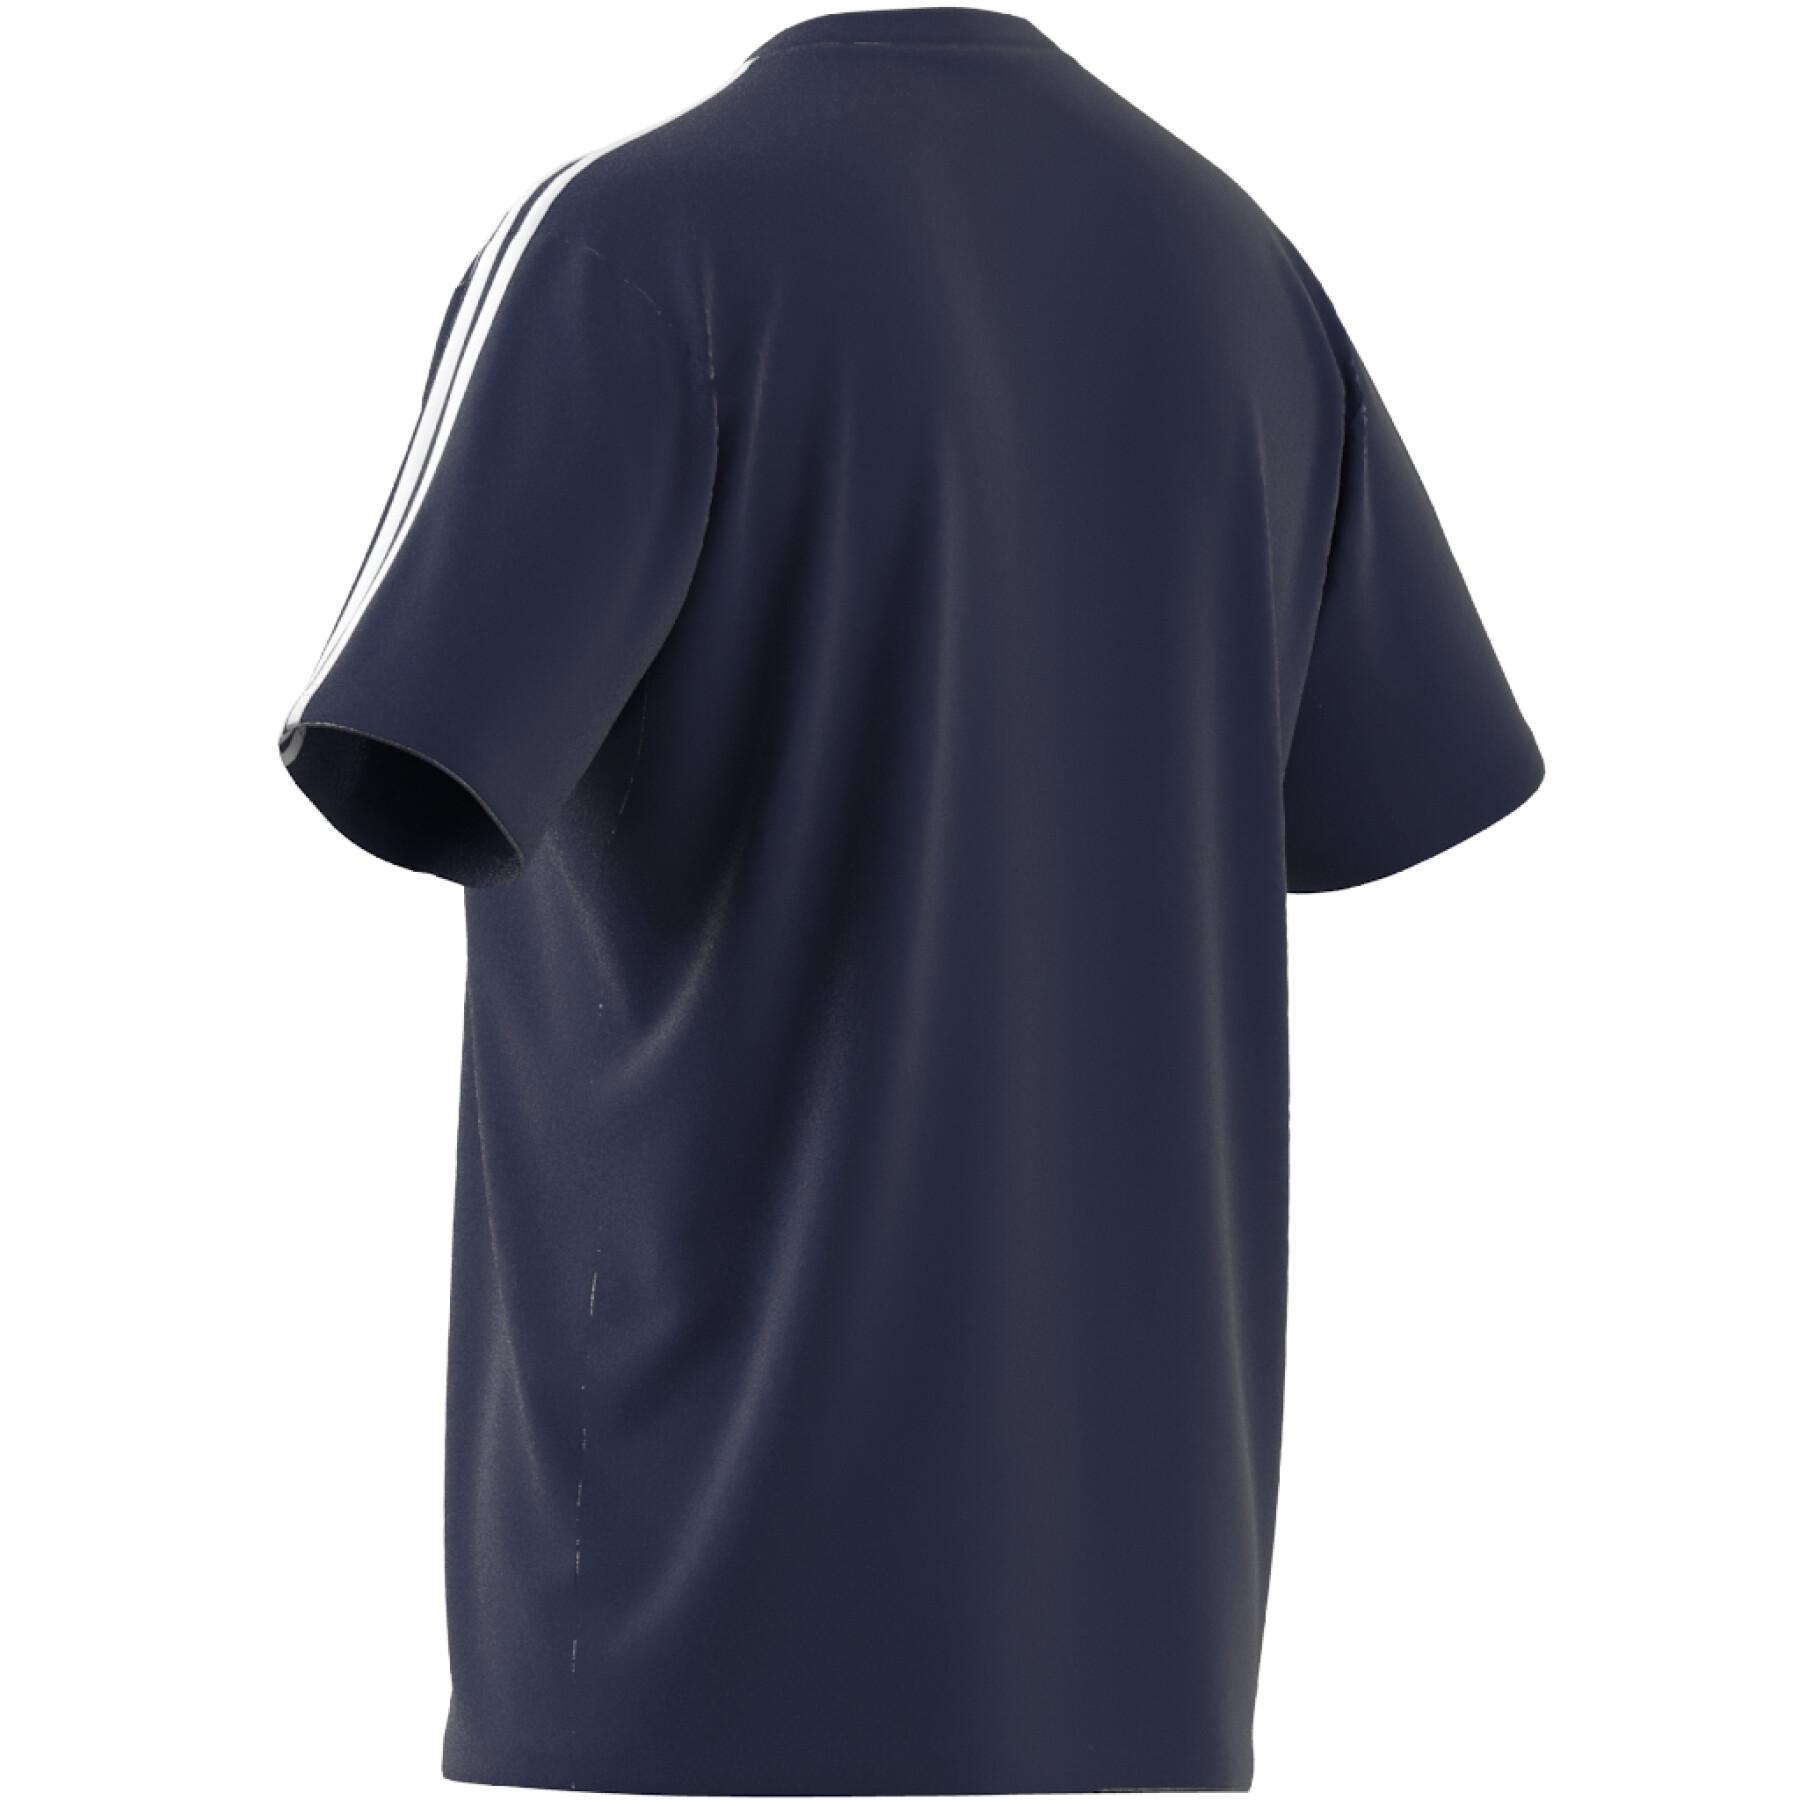 Camiseta de entrenamiento adidas 3-Stripes Essentials